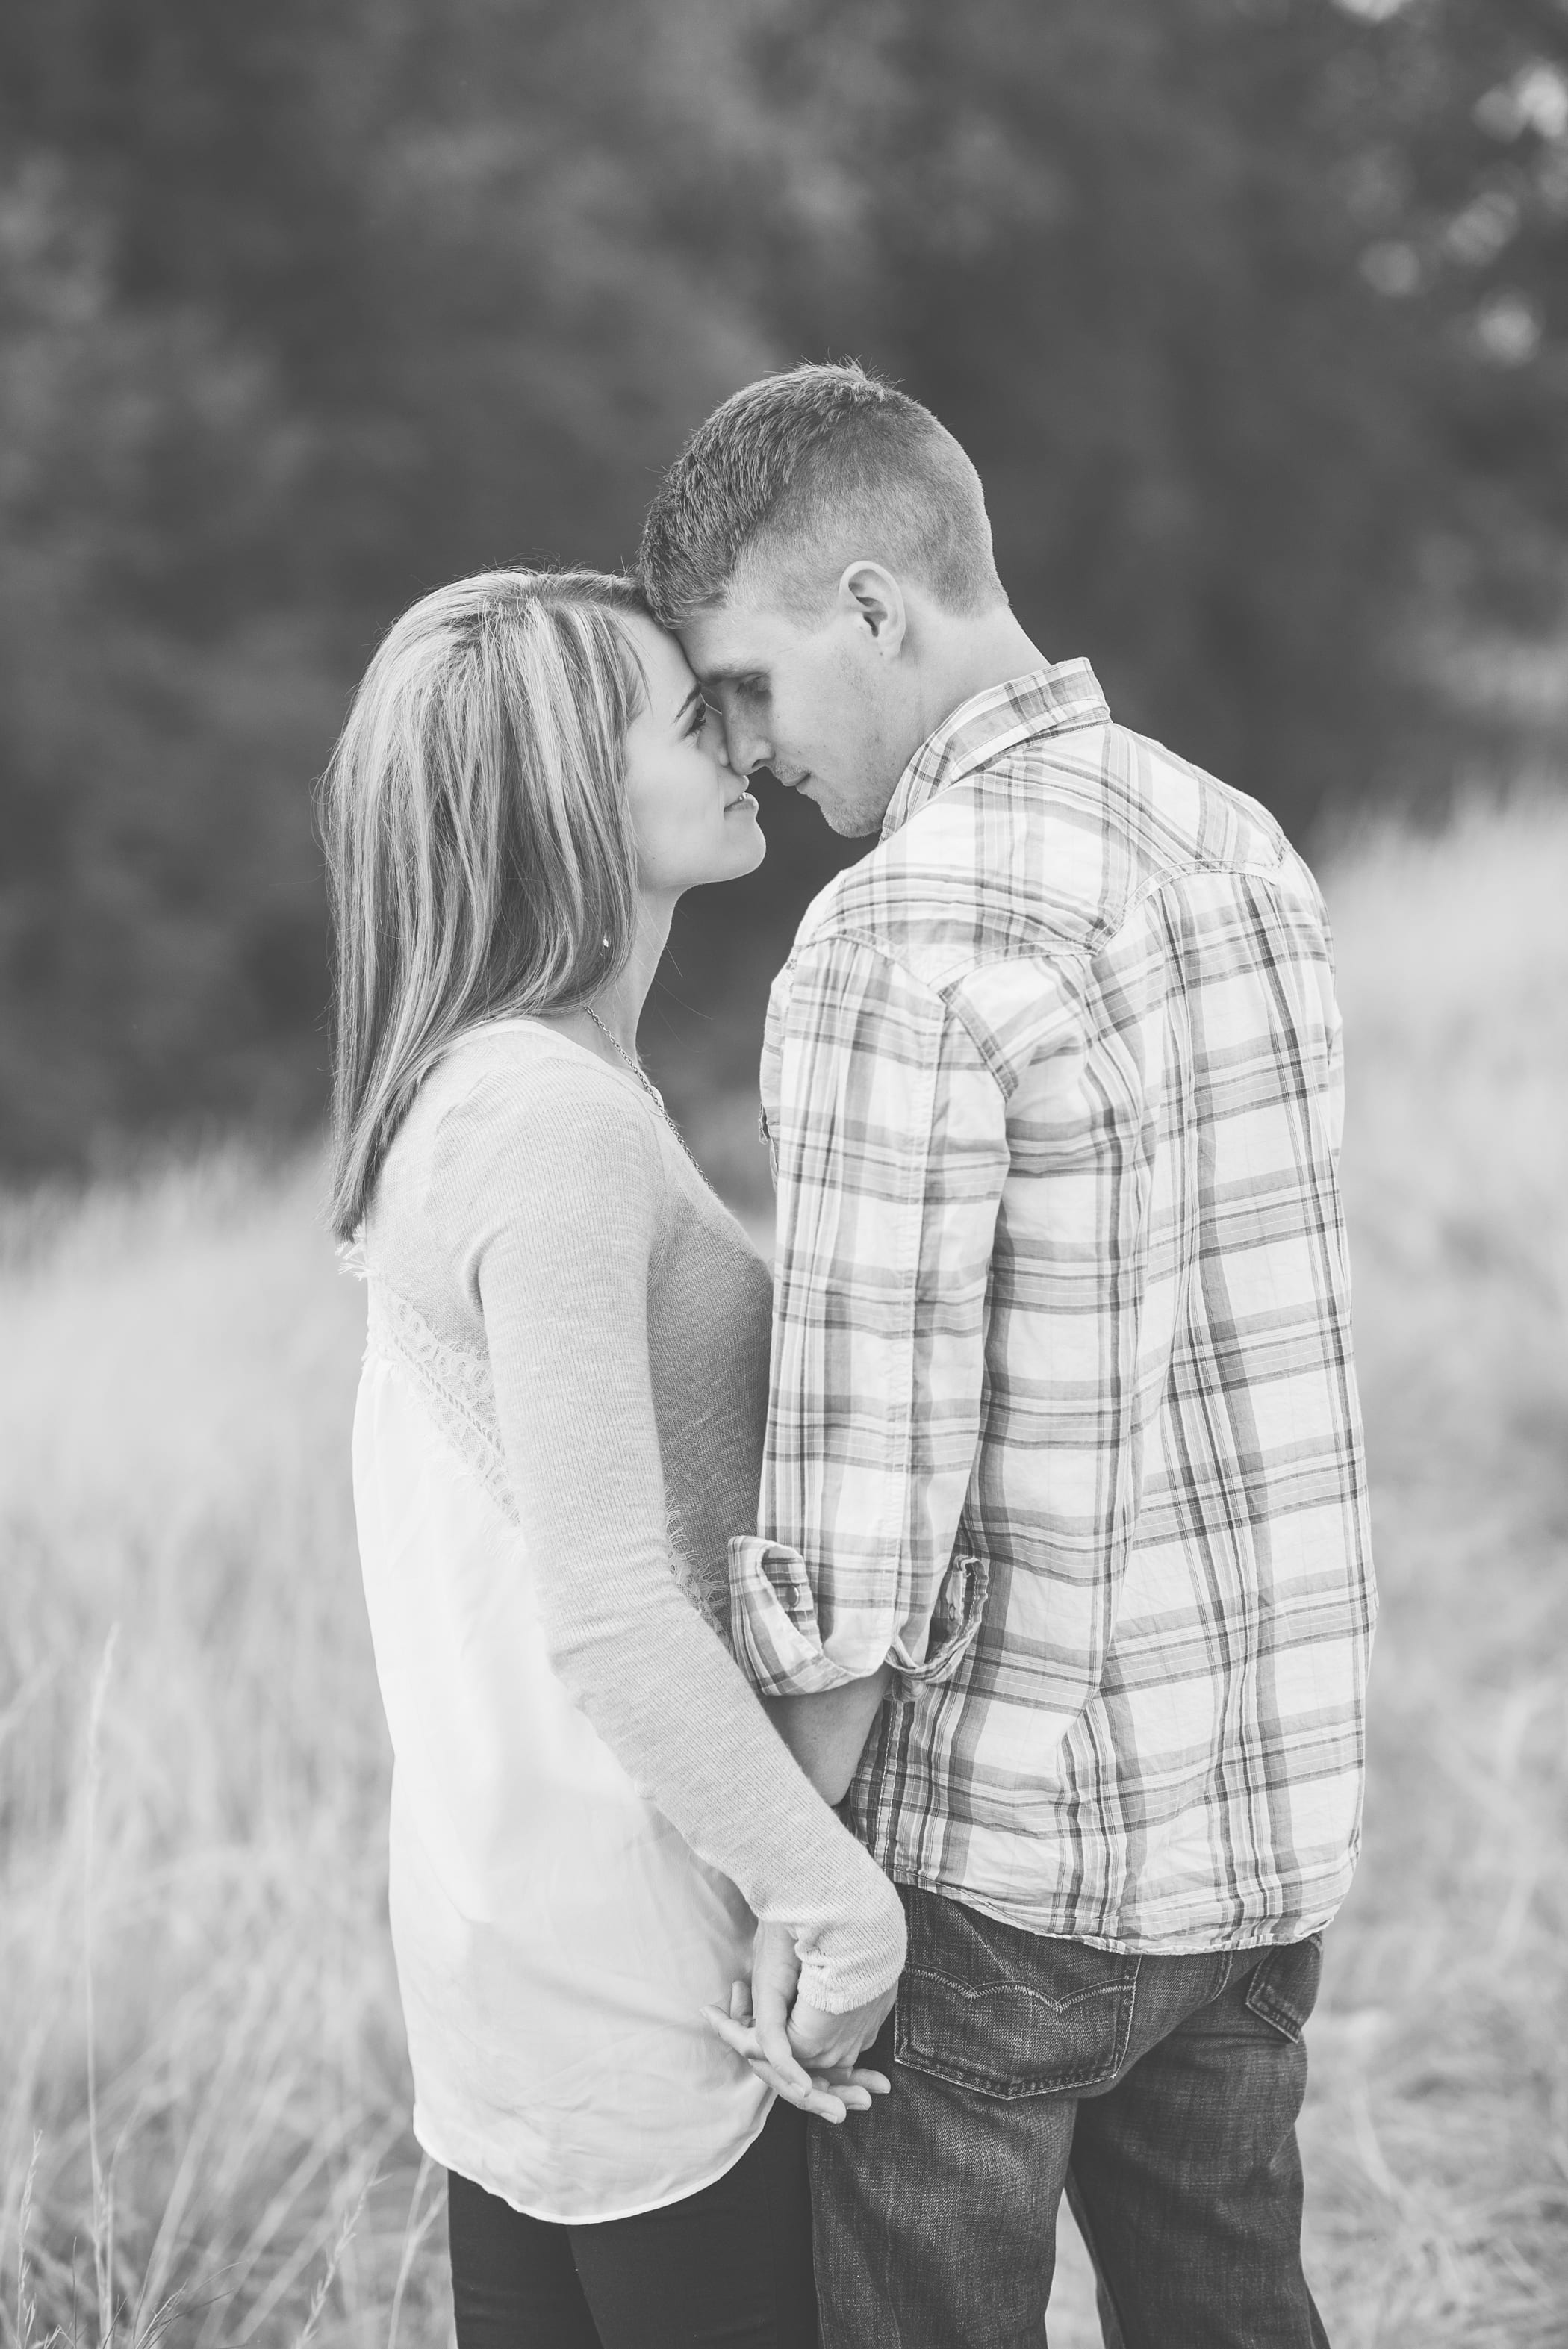 Idaho Falls Anniversary and Marriage Photographer • Michelle & Logan